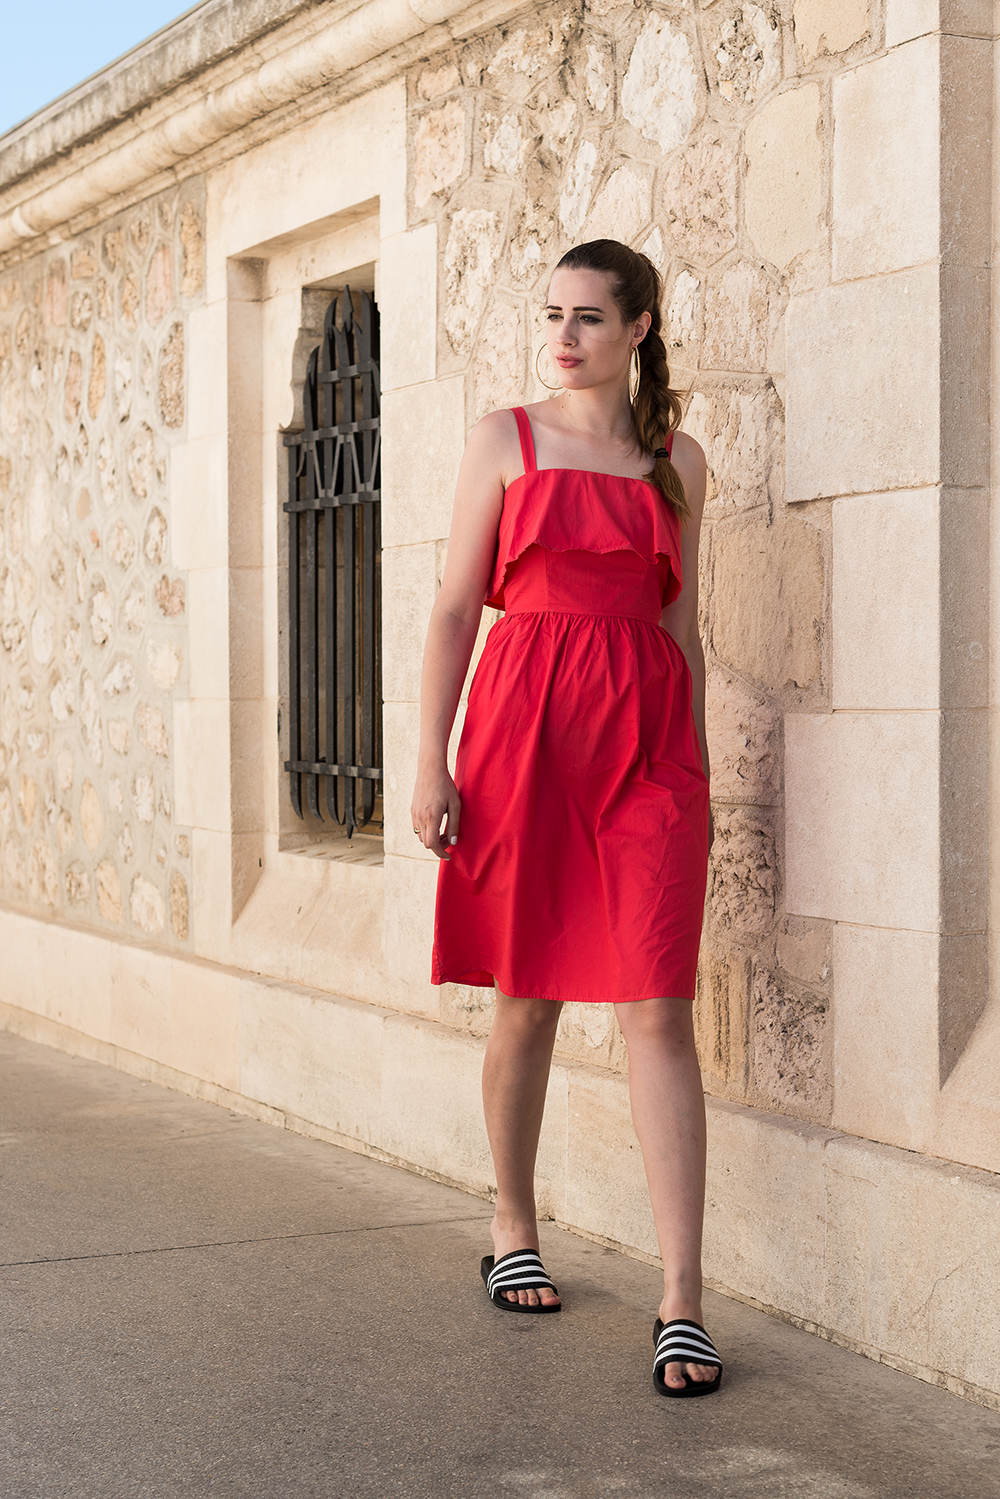 andysparkles-Modeblog Berlin-Outfit-Adilette-JustFab-rotes Kleid